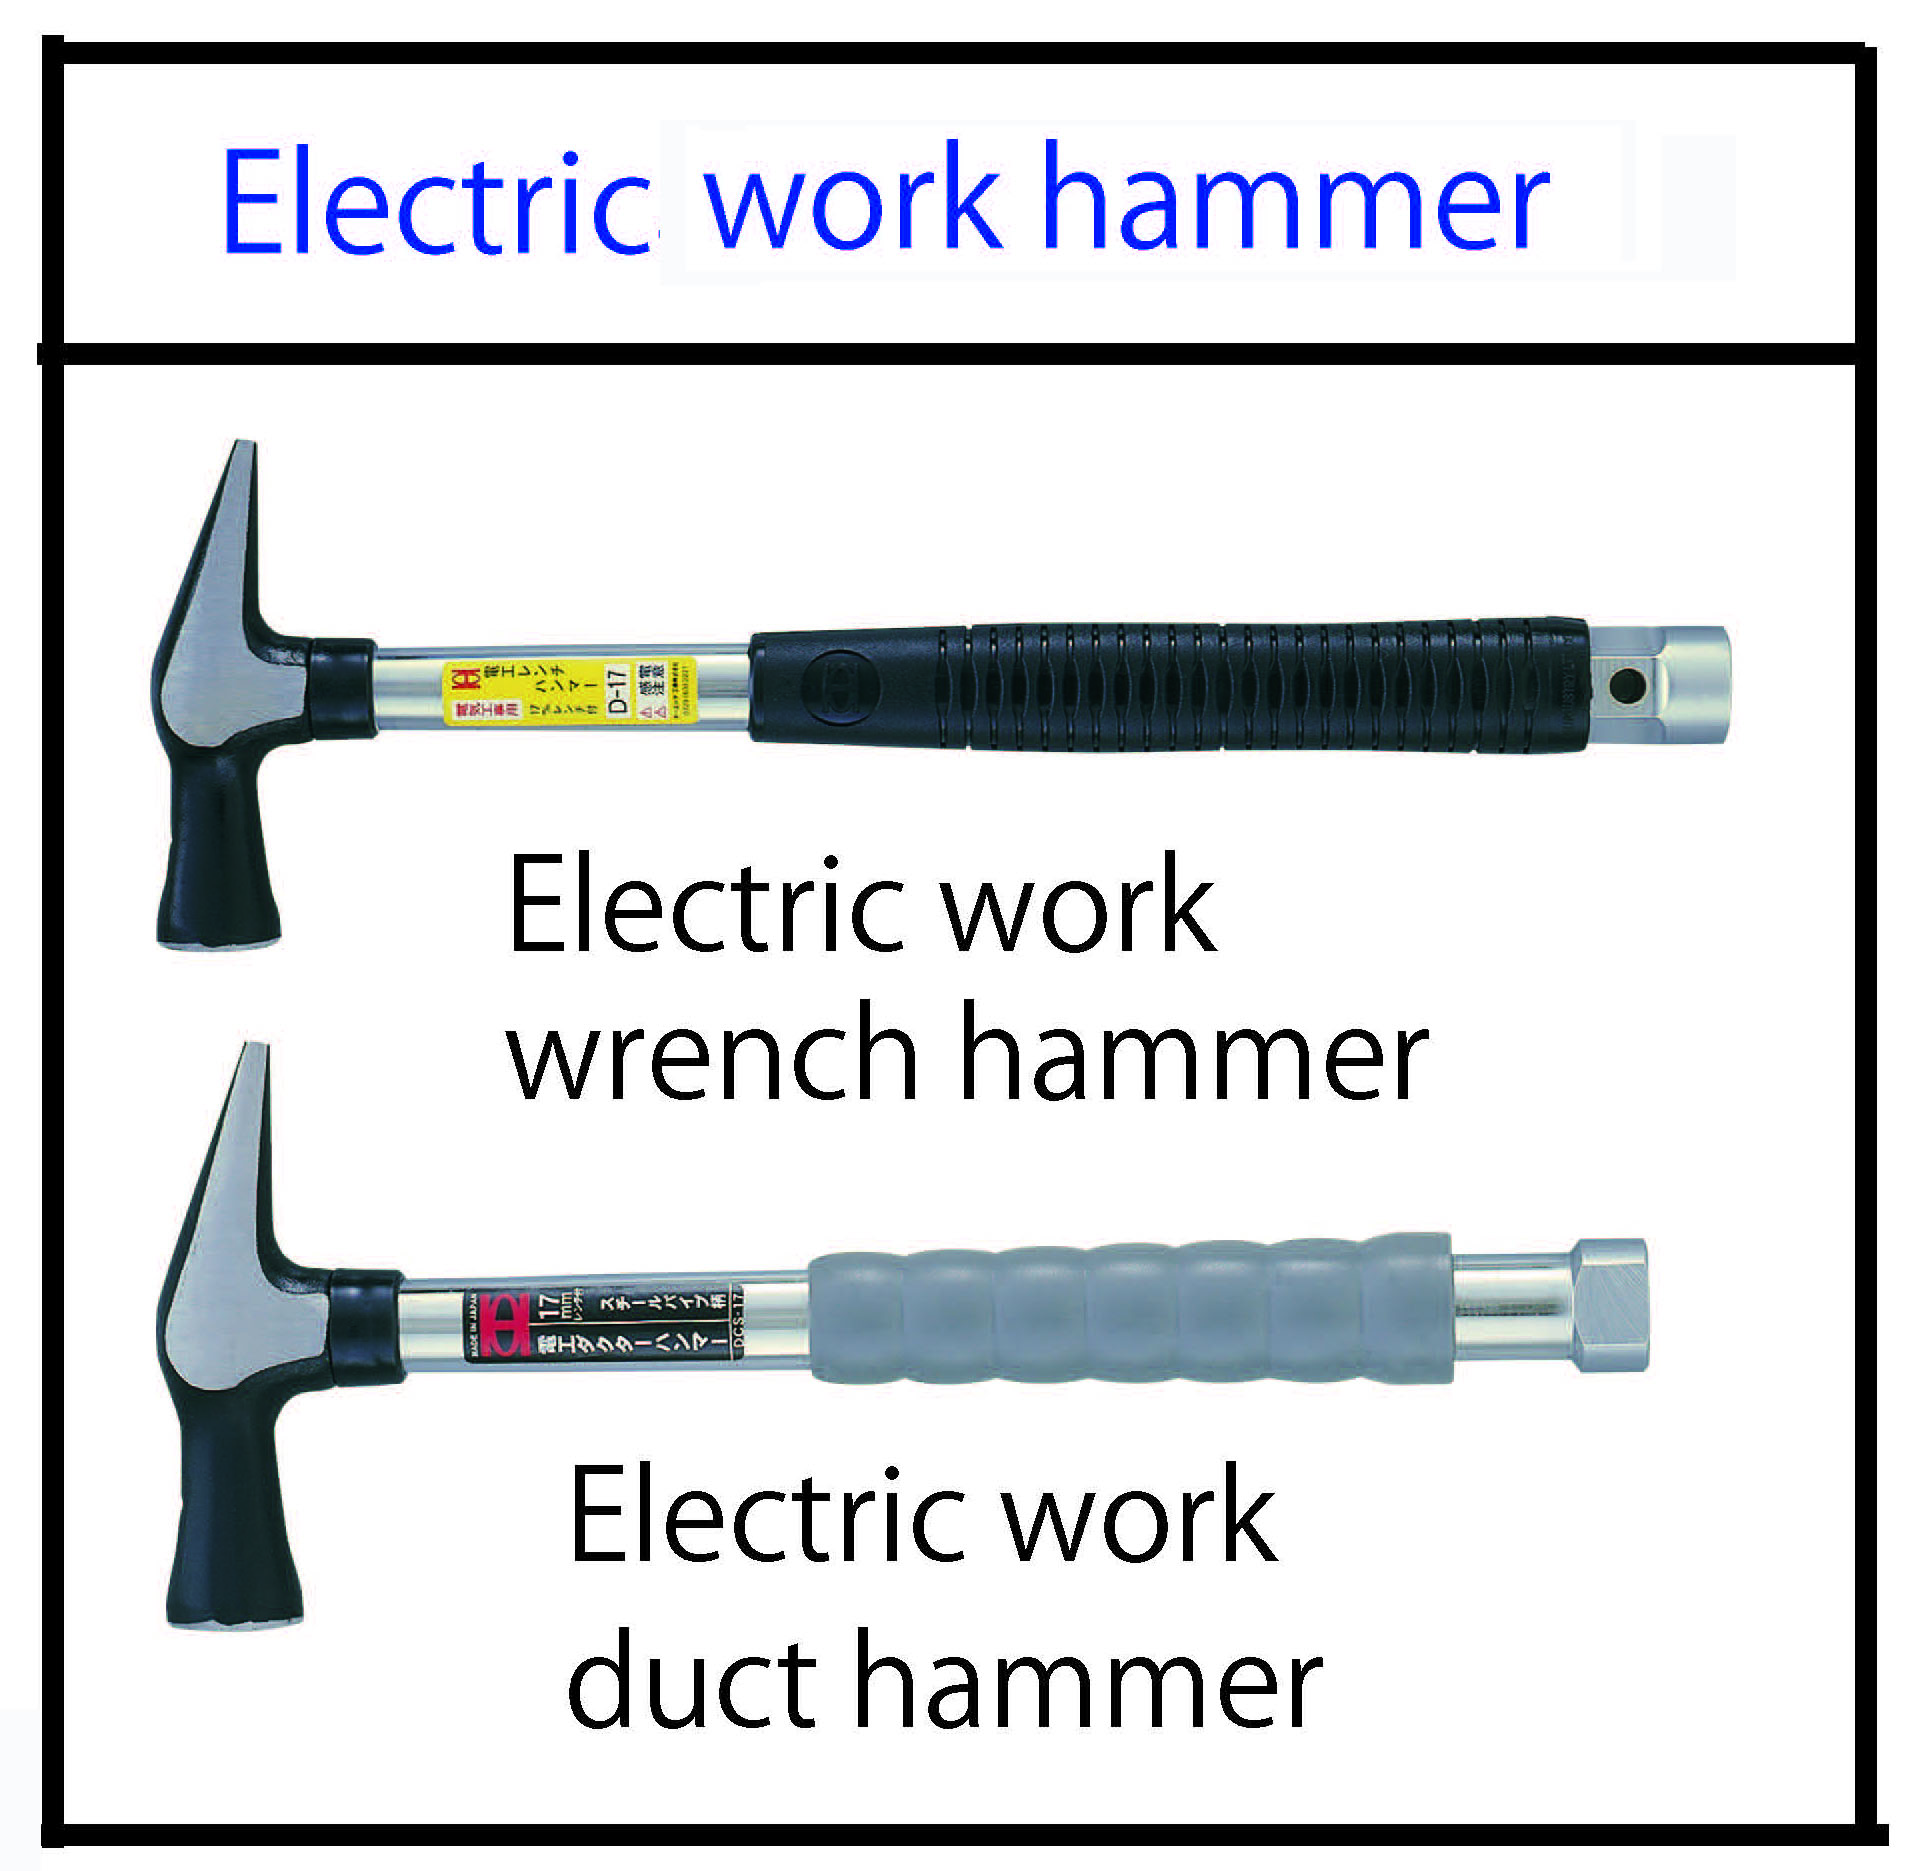 OH Hammer